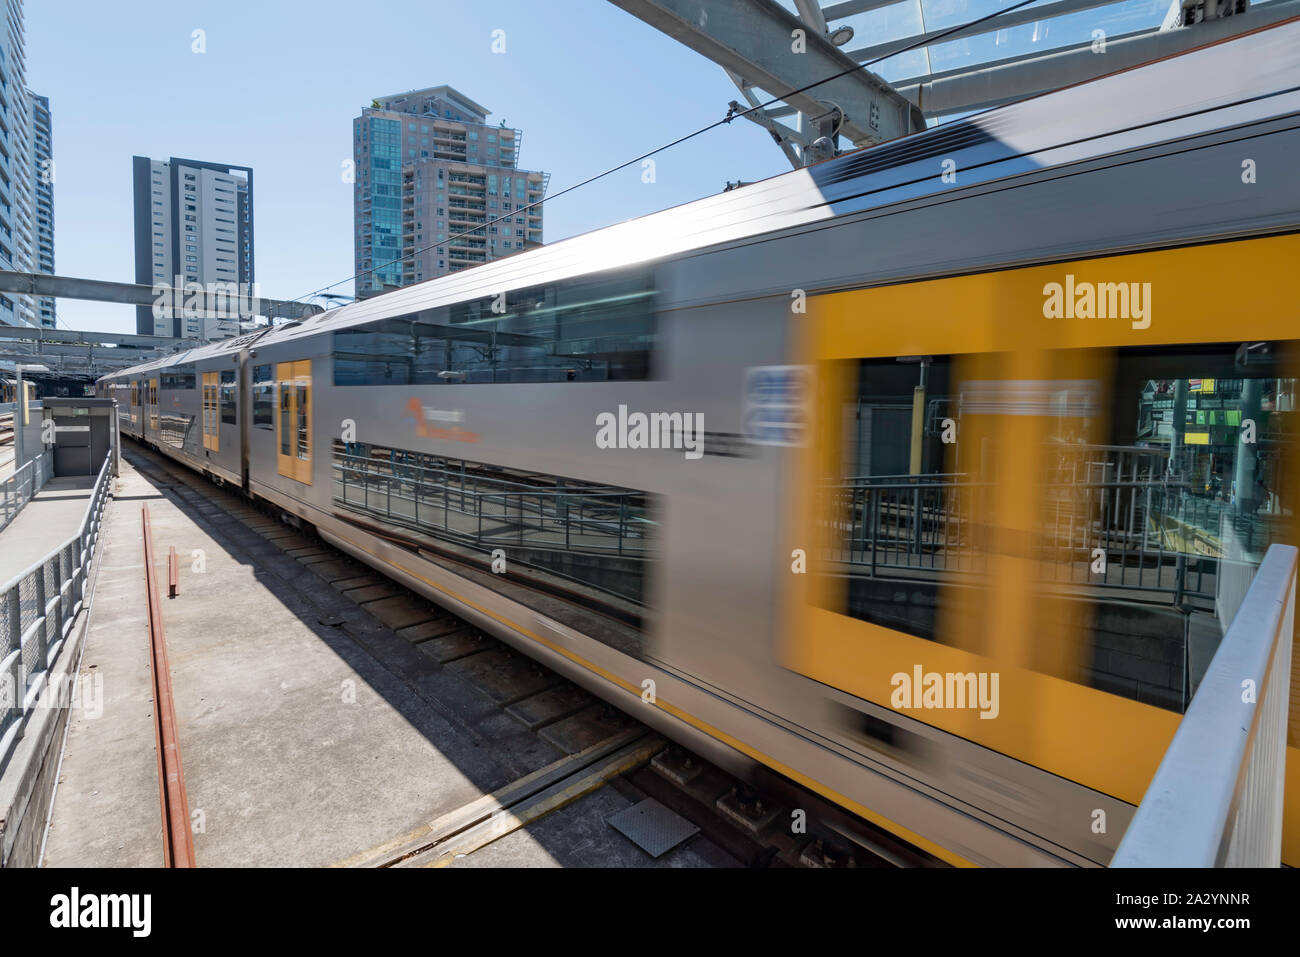 A Waratah A Series train pulls into speeds into Chatswood railway station on Sydney's north shore, Australia Stock Photo